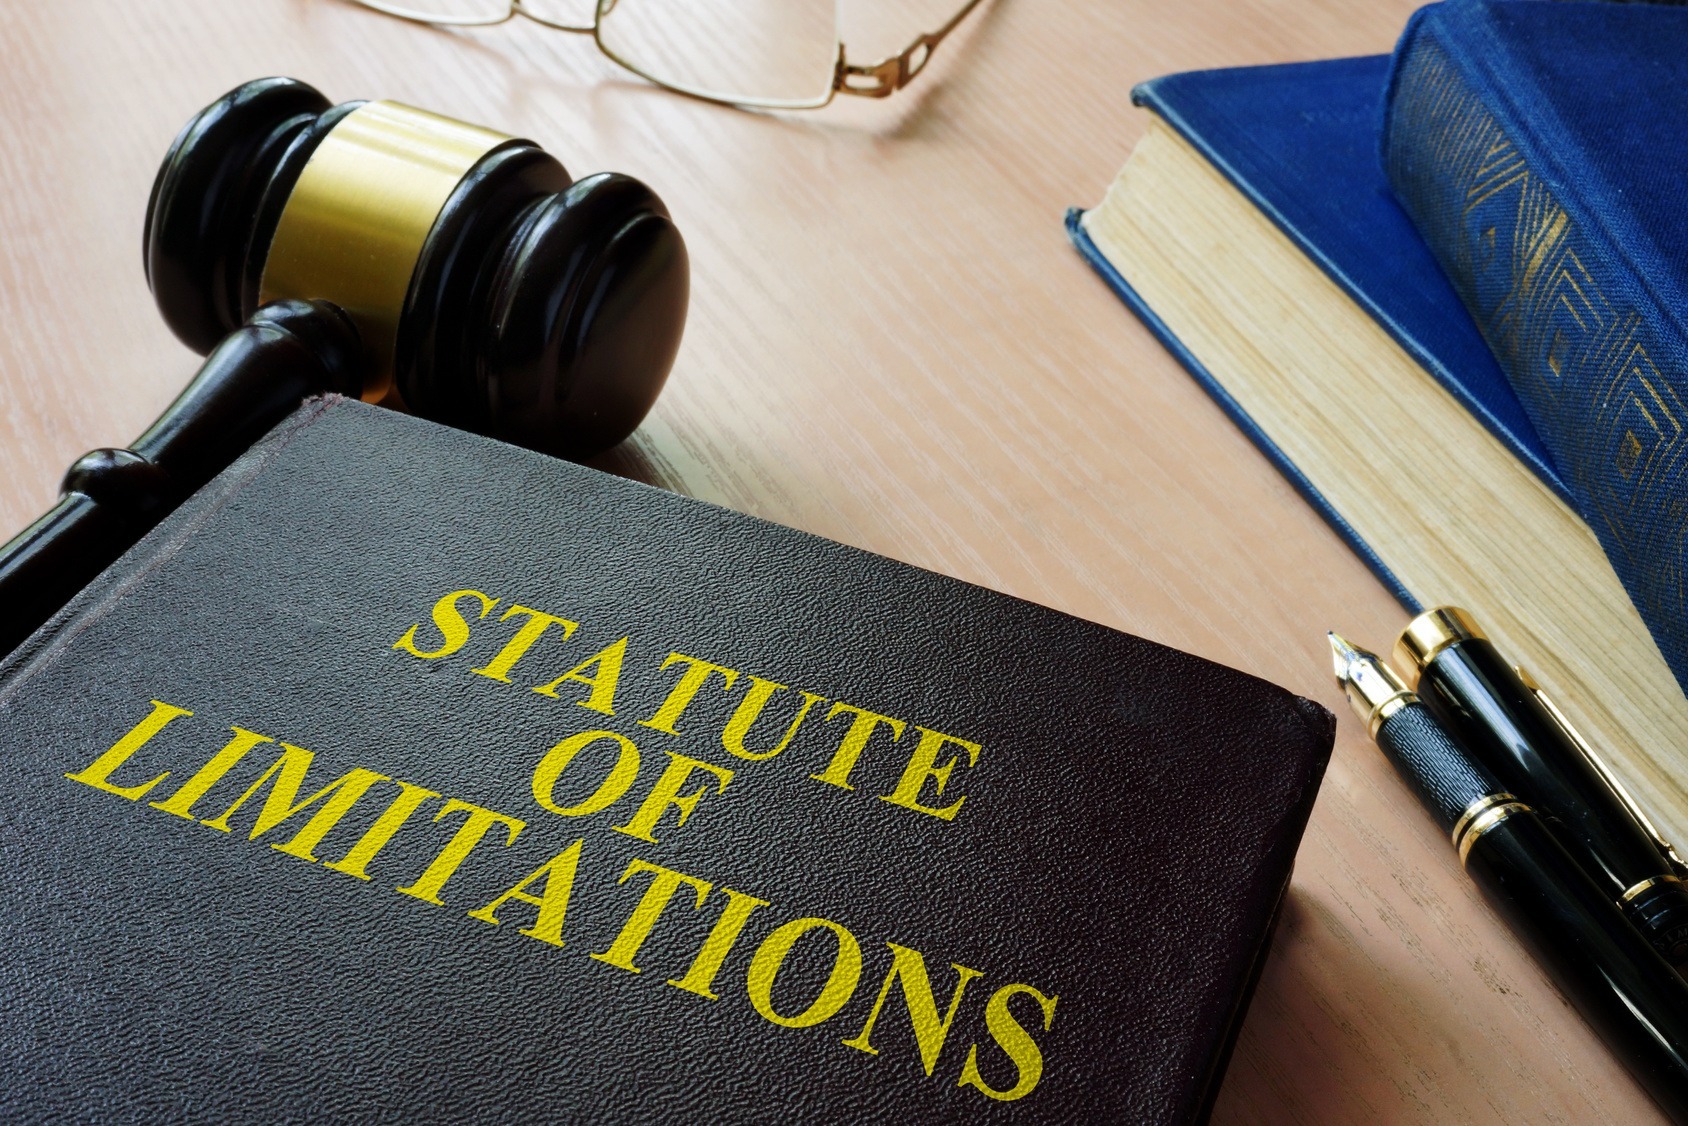 The Statute of Limitations